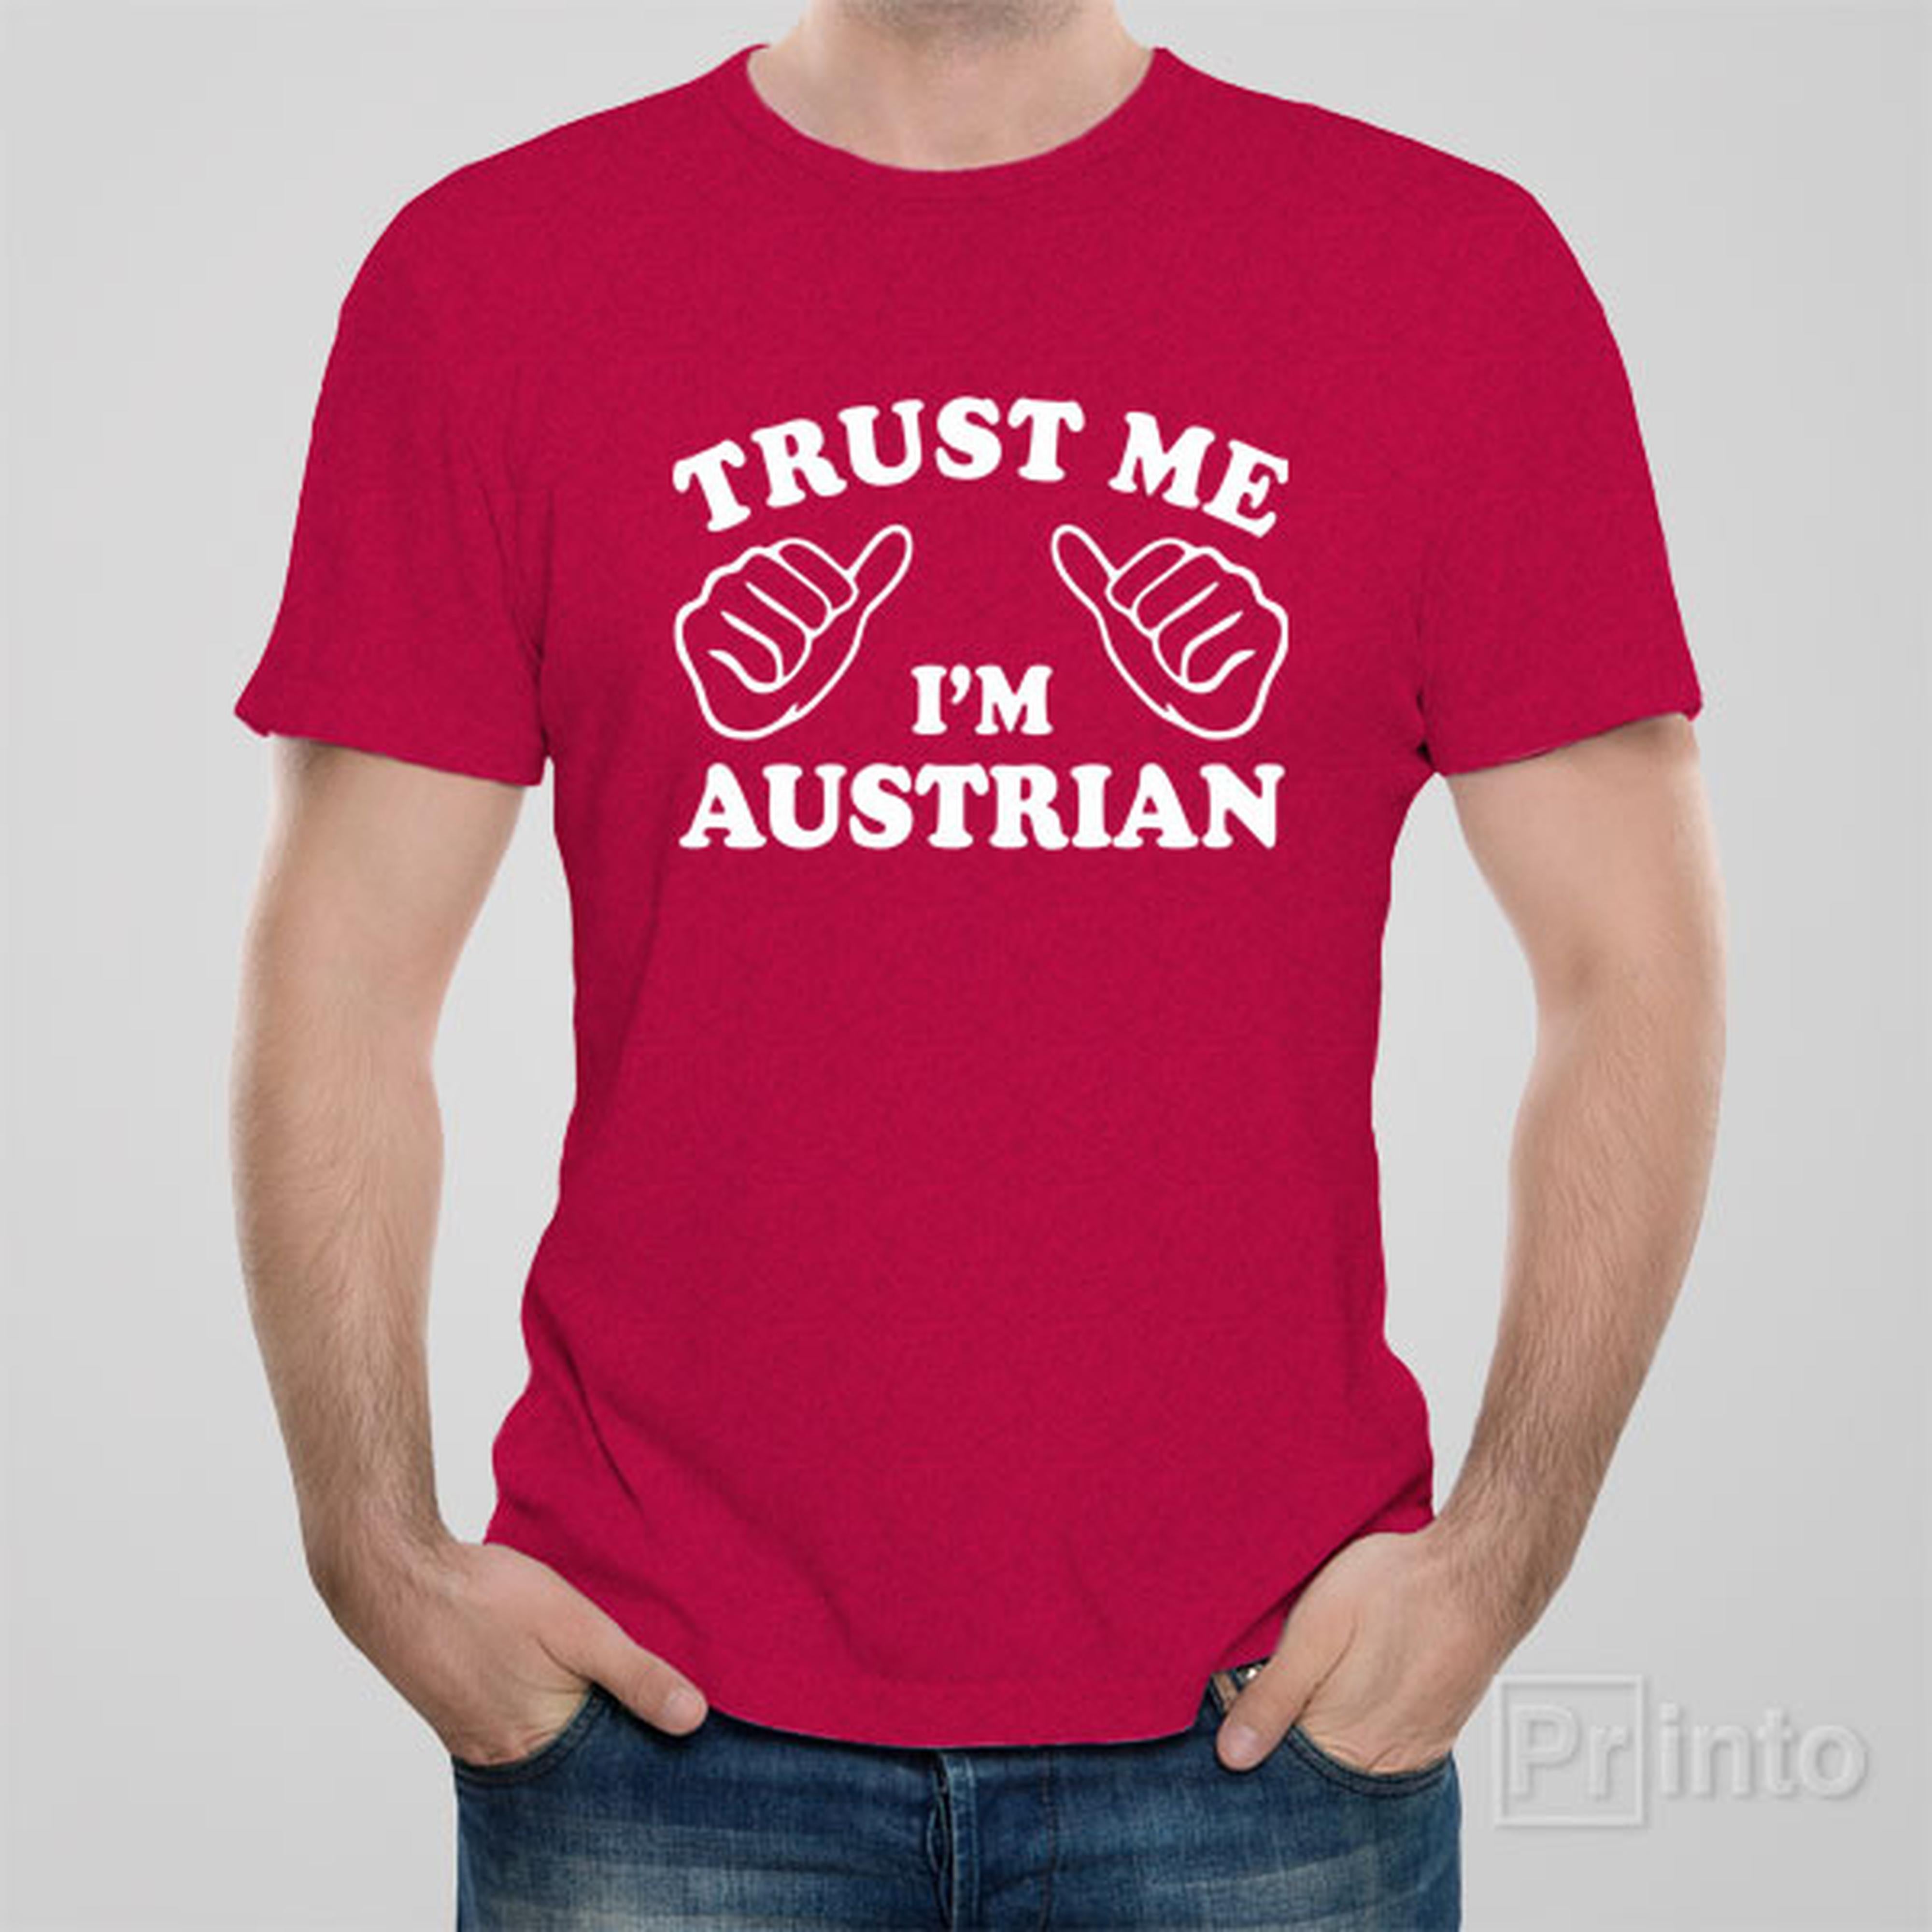 trust-me-i-am-austrian-t-shirt